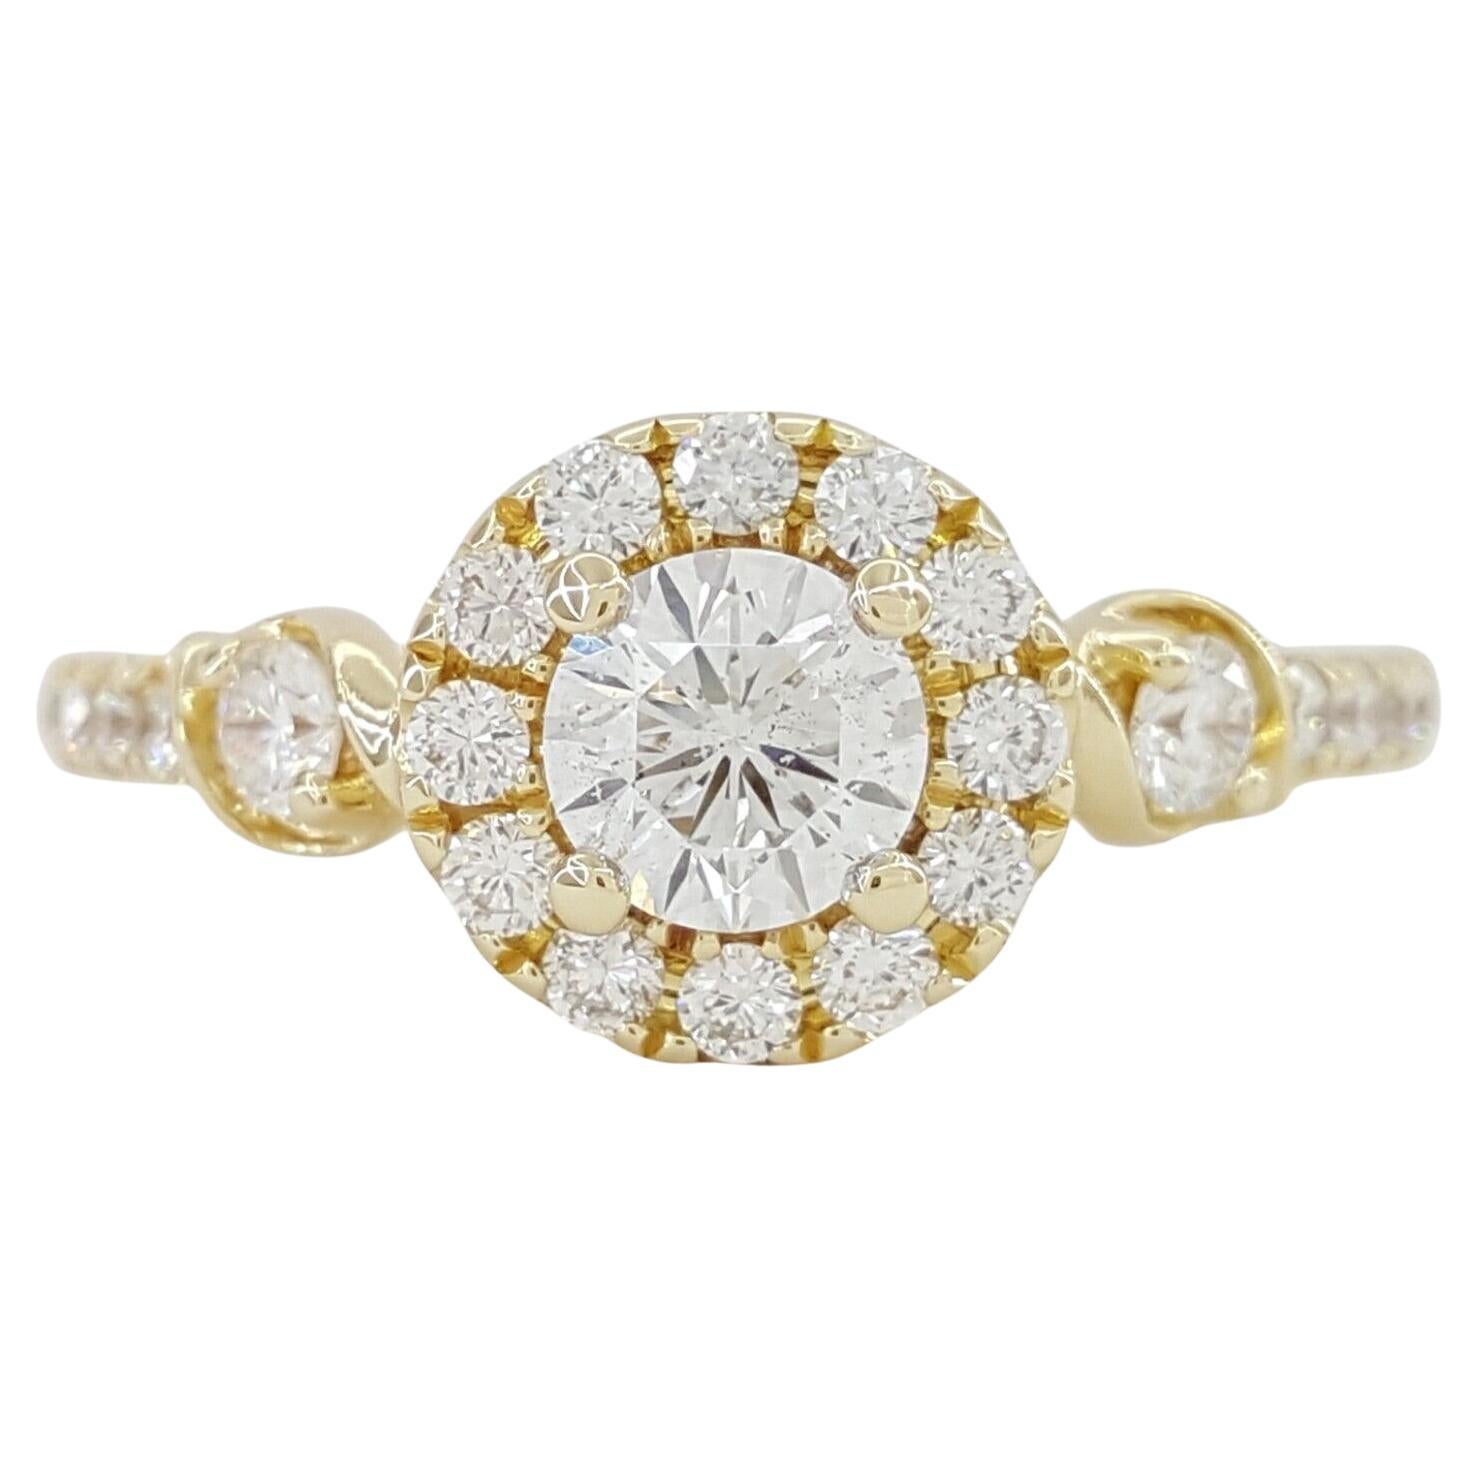 The Leo Diamond Engagement Rings